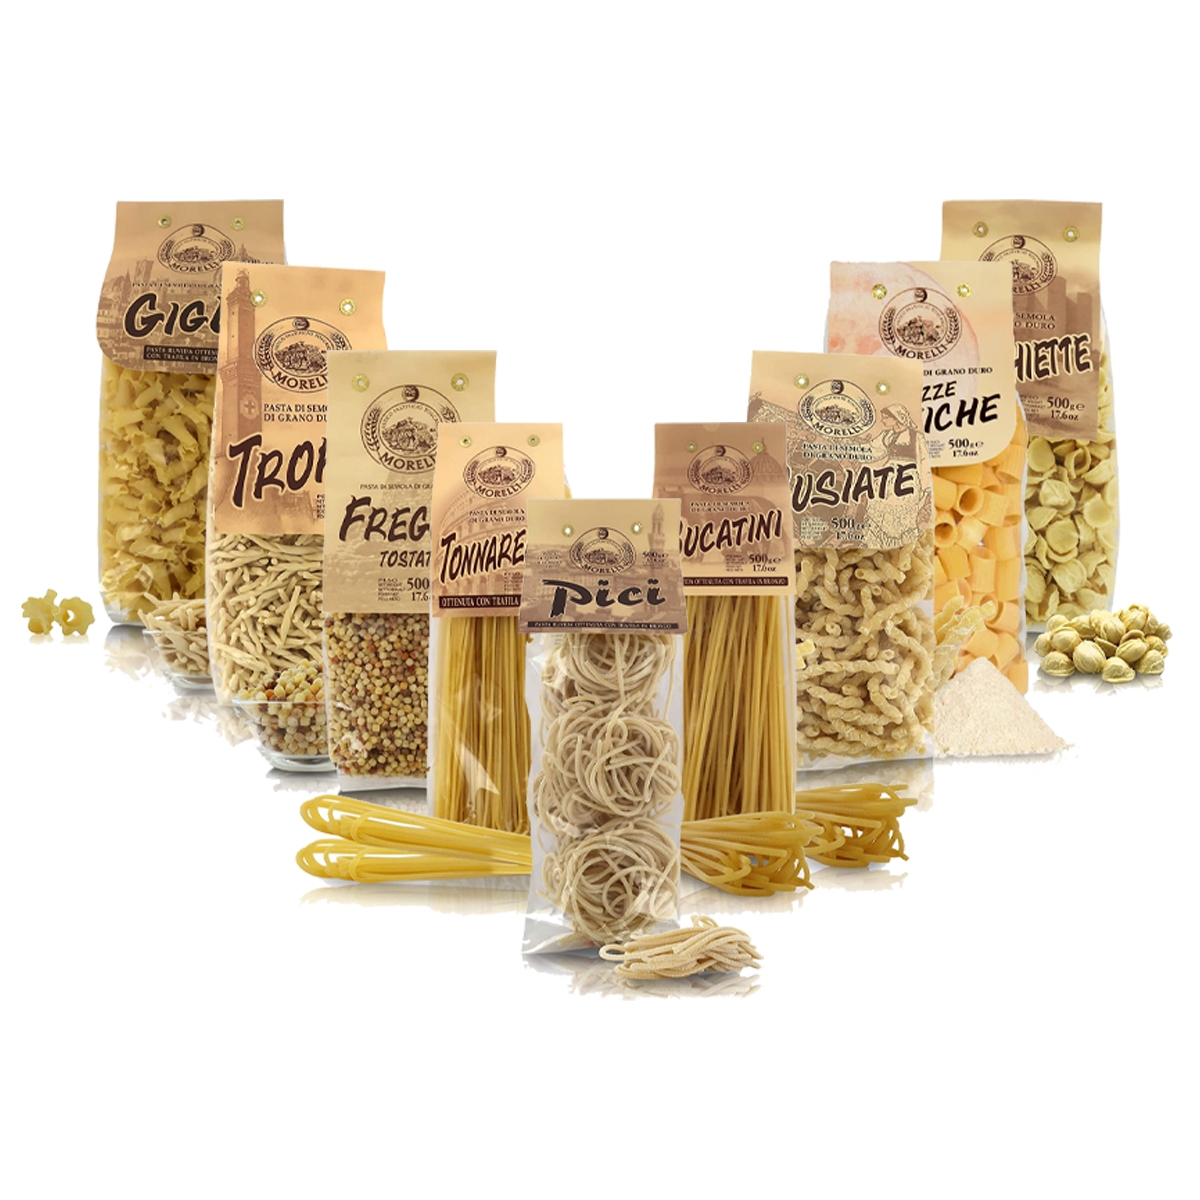 Anico pastorio morelli - pasta de germen de trigo italiano - caja 3,25 kg